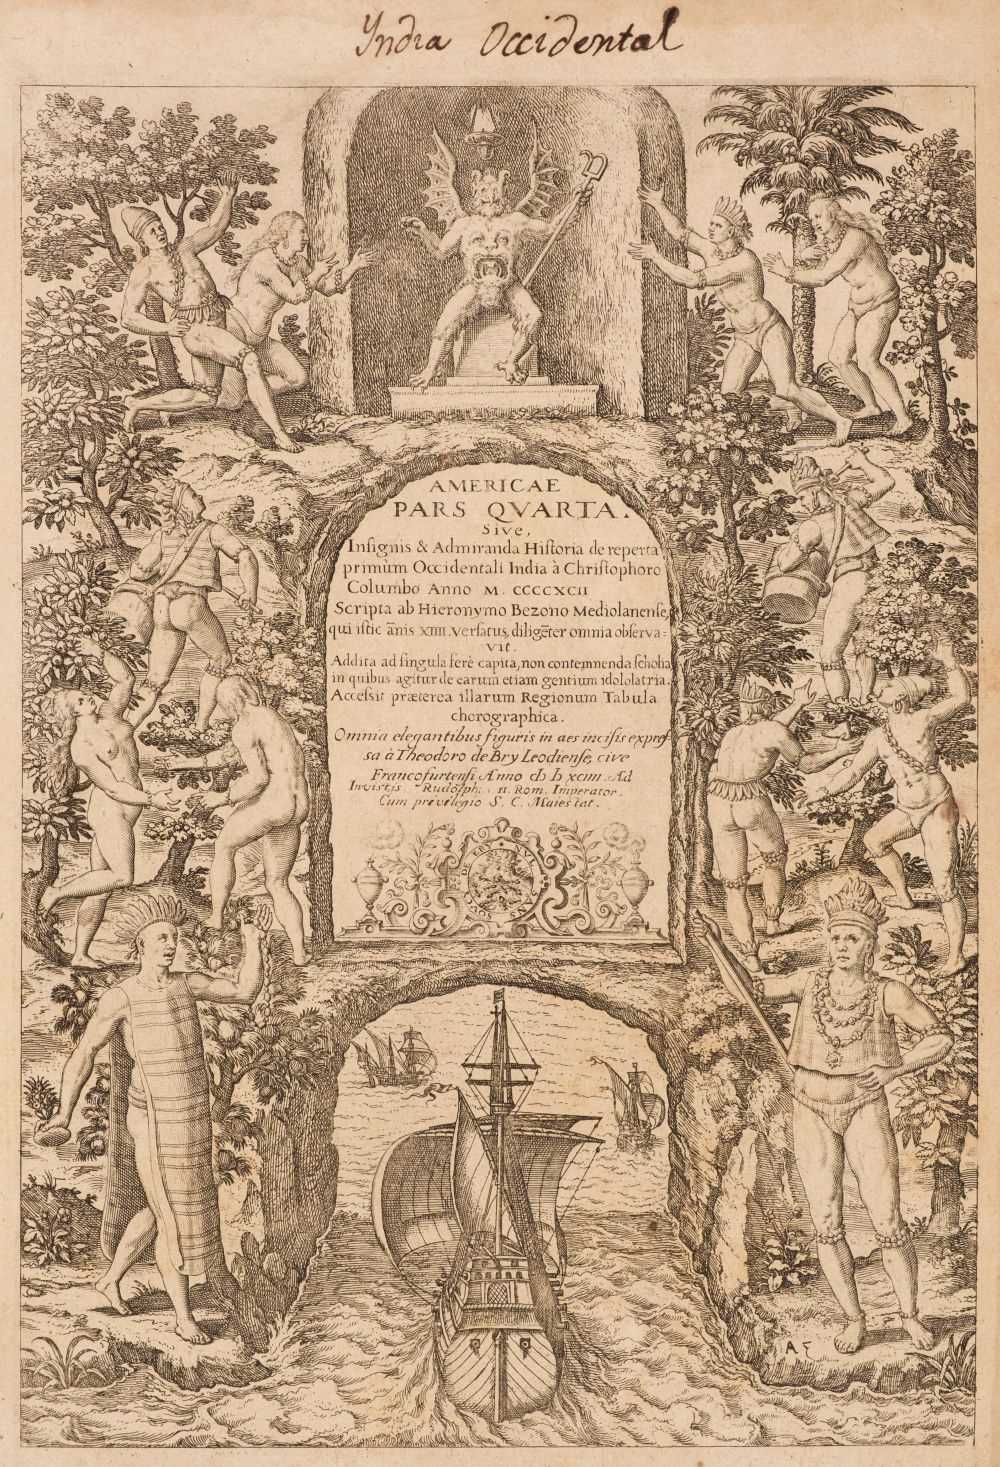 Lot 13 - De Bry (Theodore). Americæ Pars Quarta, Frankfurt: Theodore De Bry, 1594